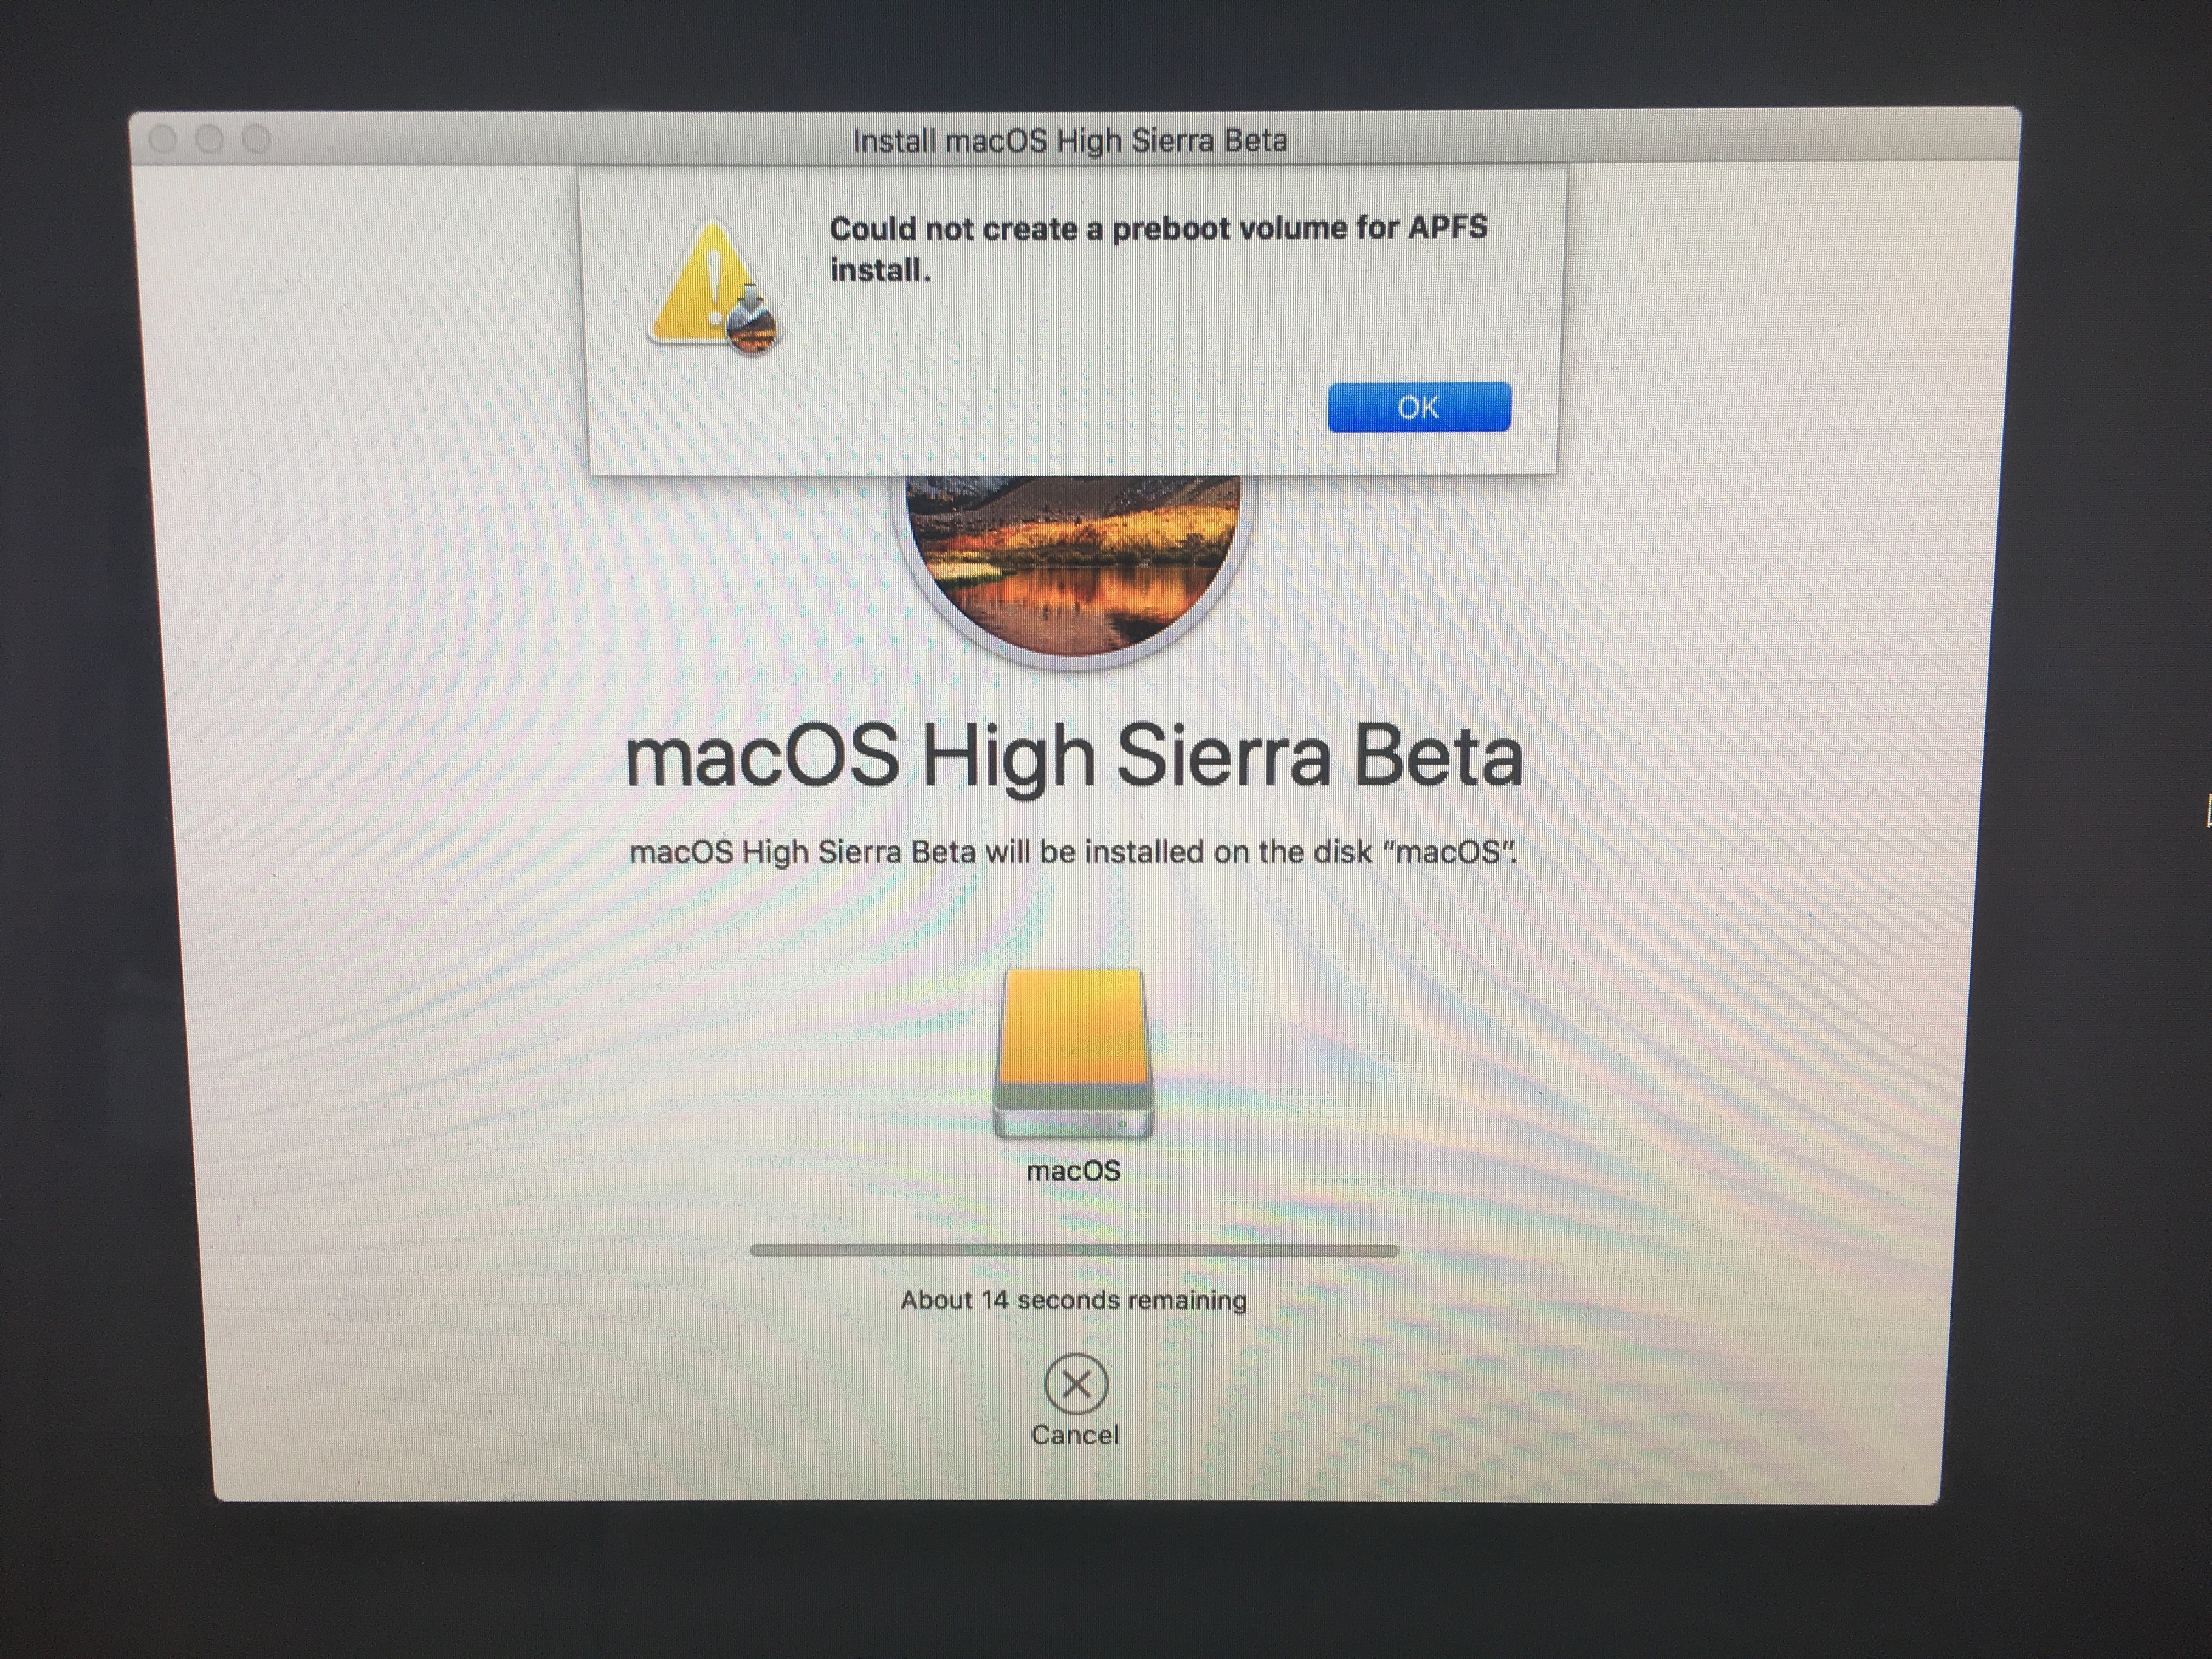 can i remove install mac os sierra